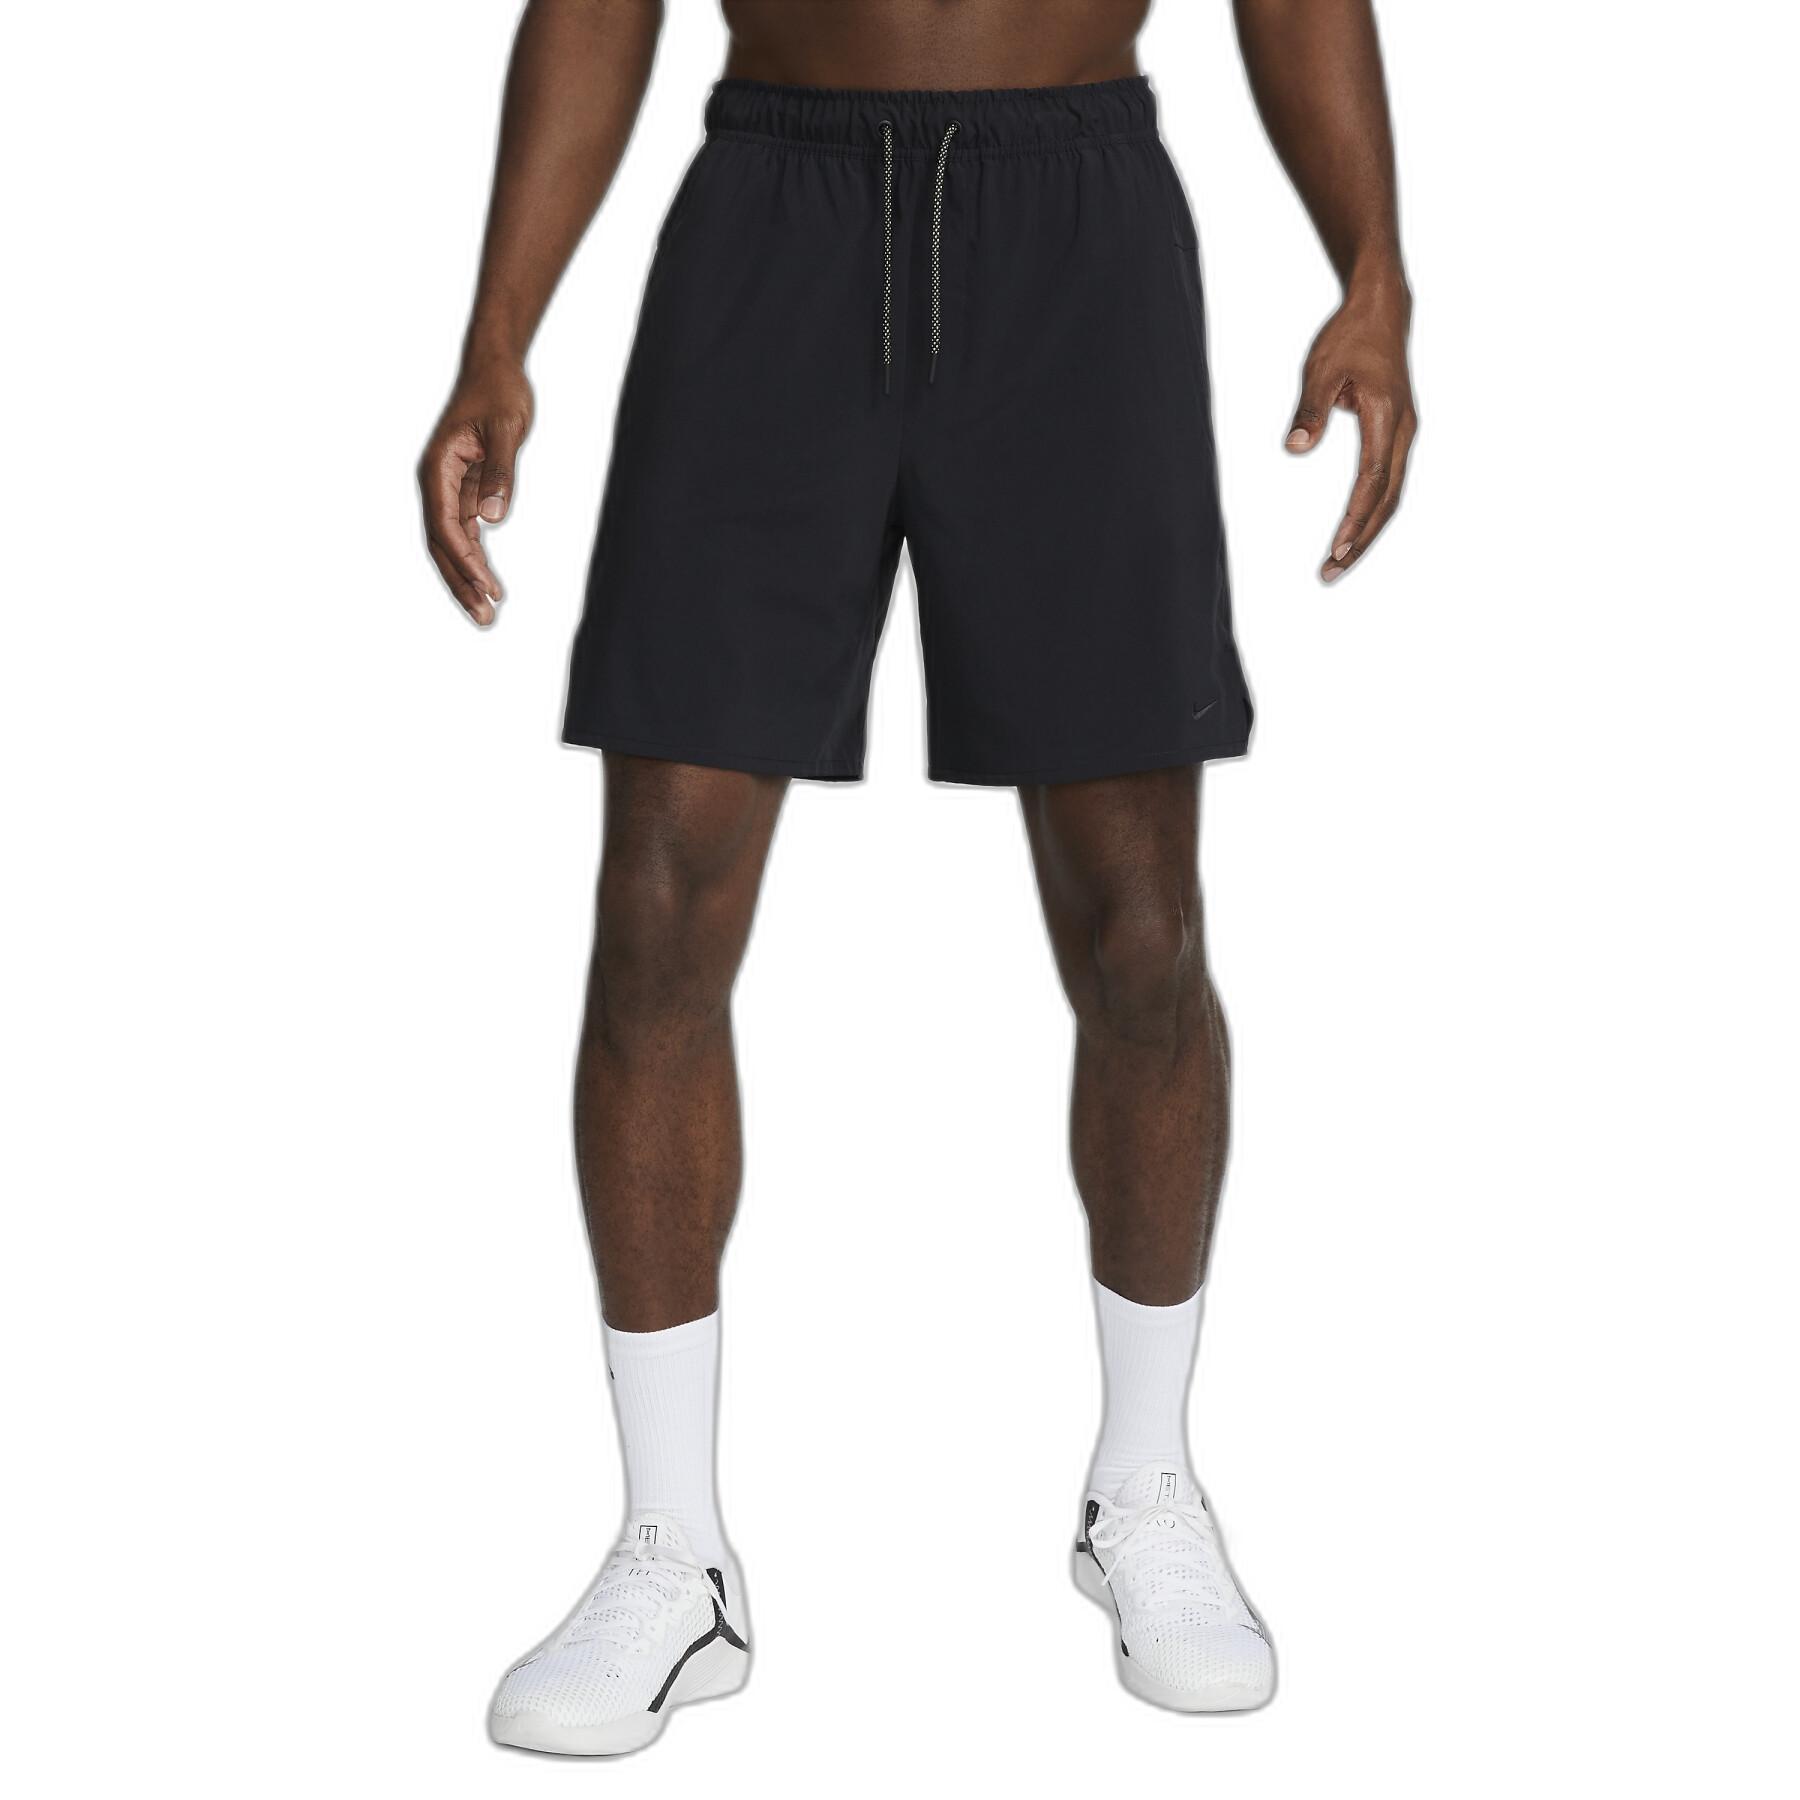 Woven shorts Nike Dri-Fit Unlimited 7 UL Dye